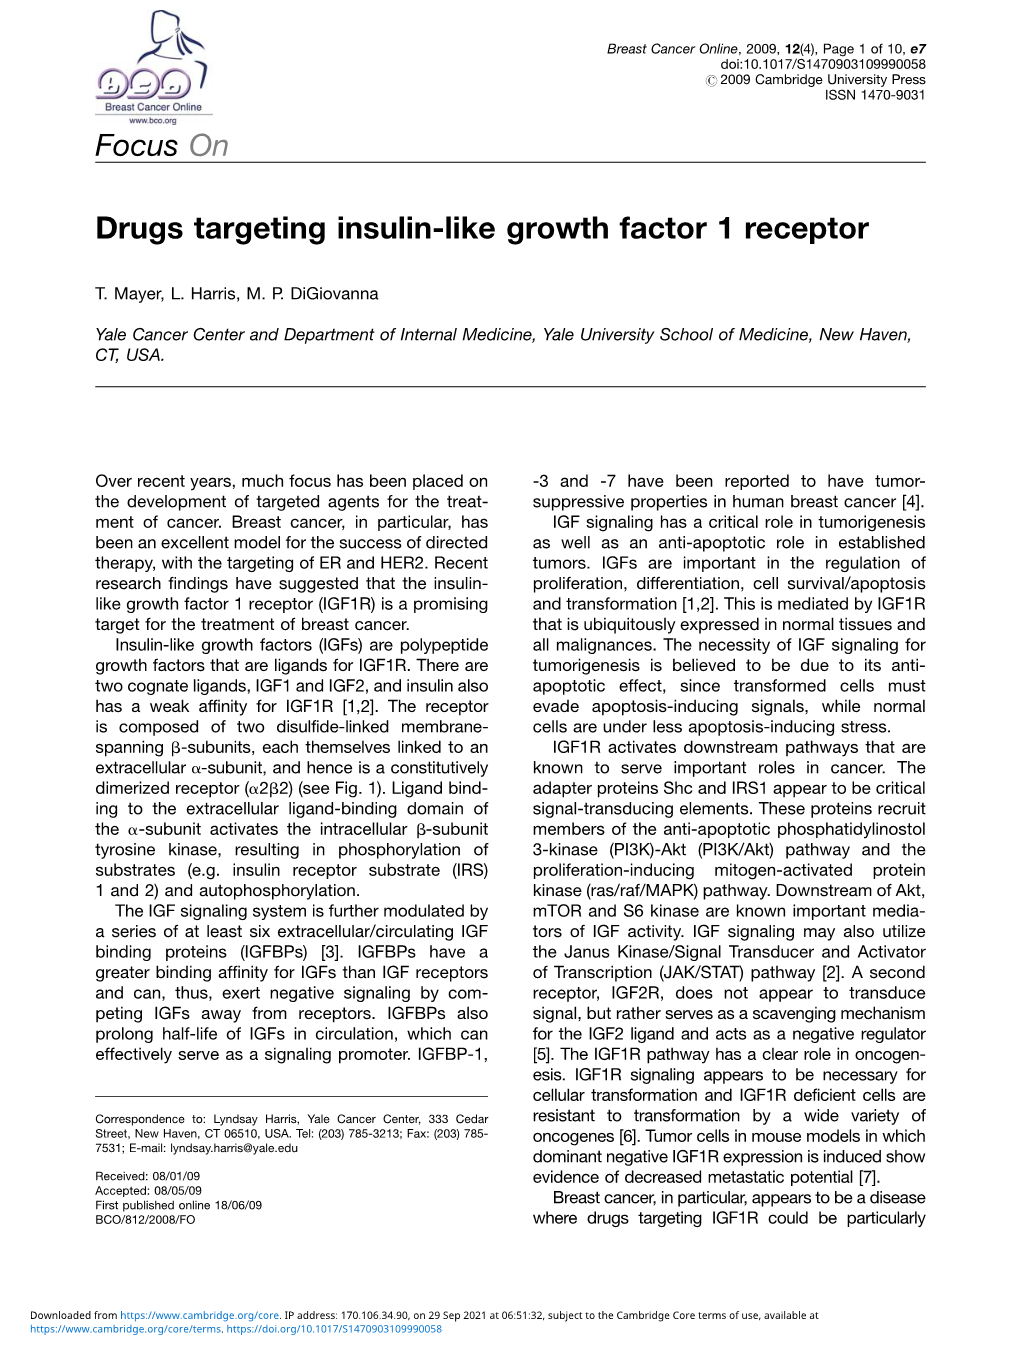 Drugs Targeting Insulin-Like Growth Factor 1 Receptor